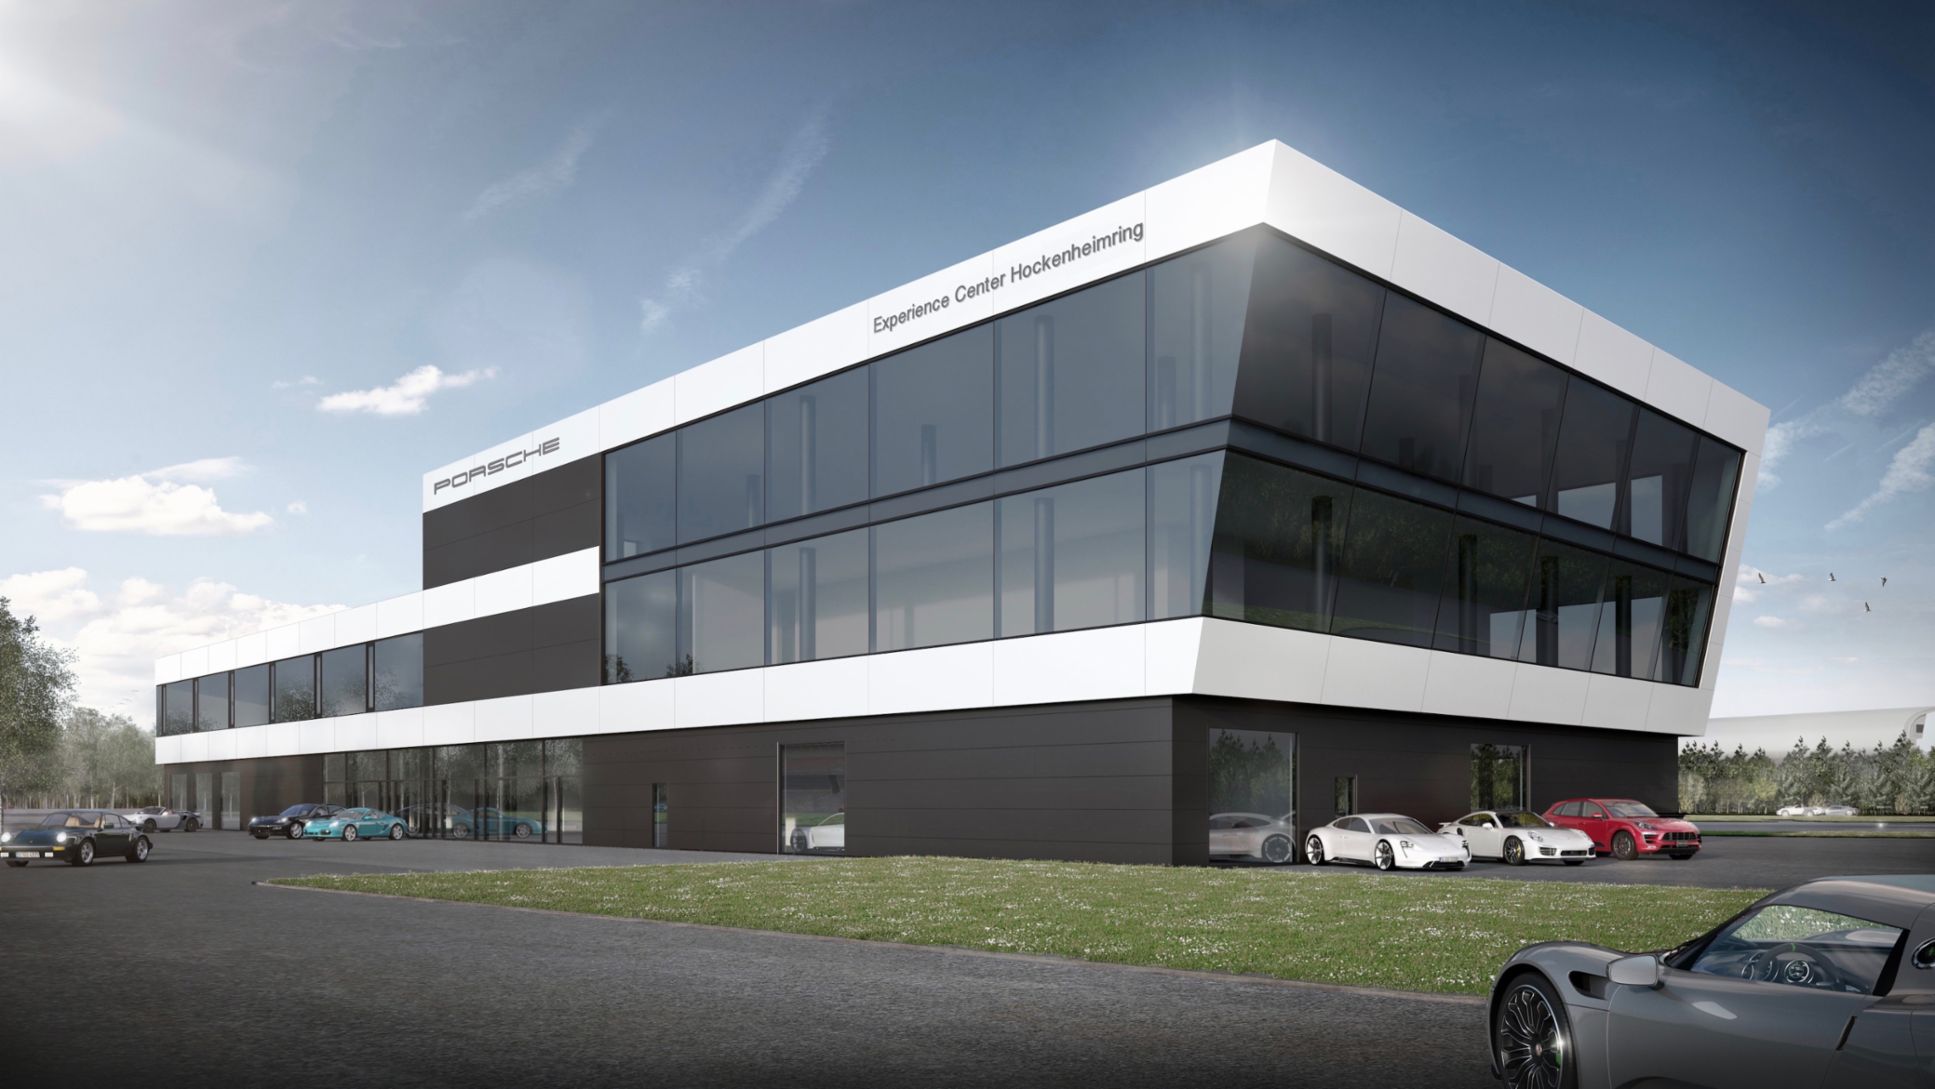 Porsche Experience Center Hockenheimring, 2019, Porsche AG